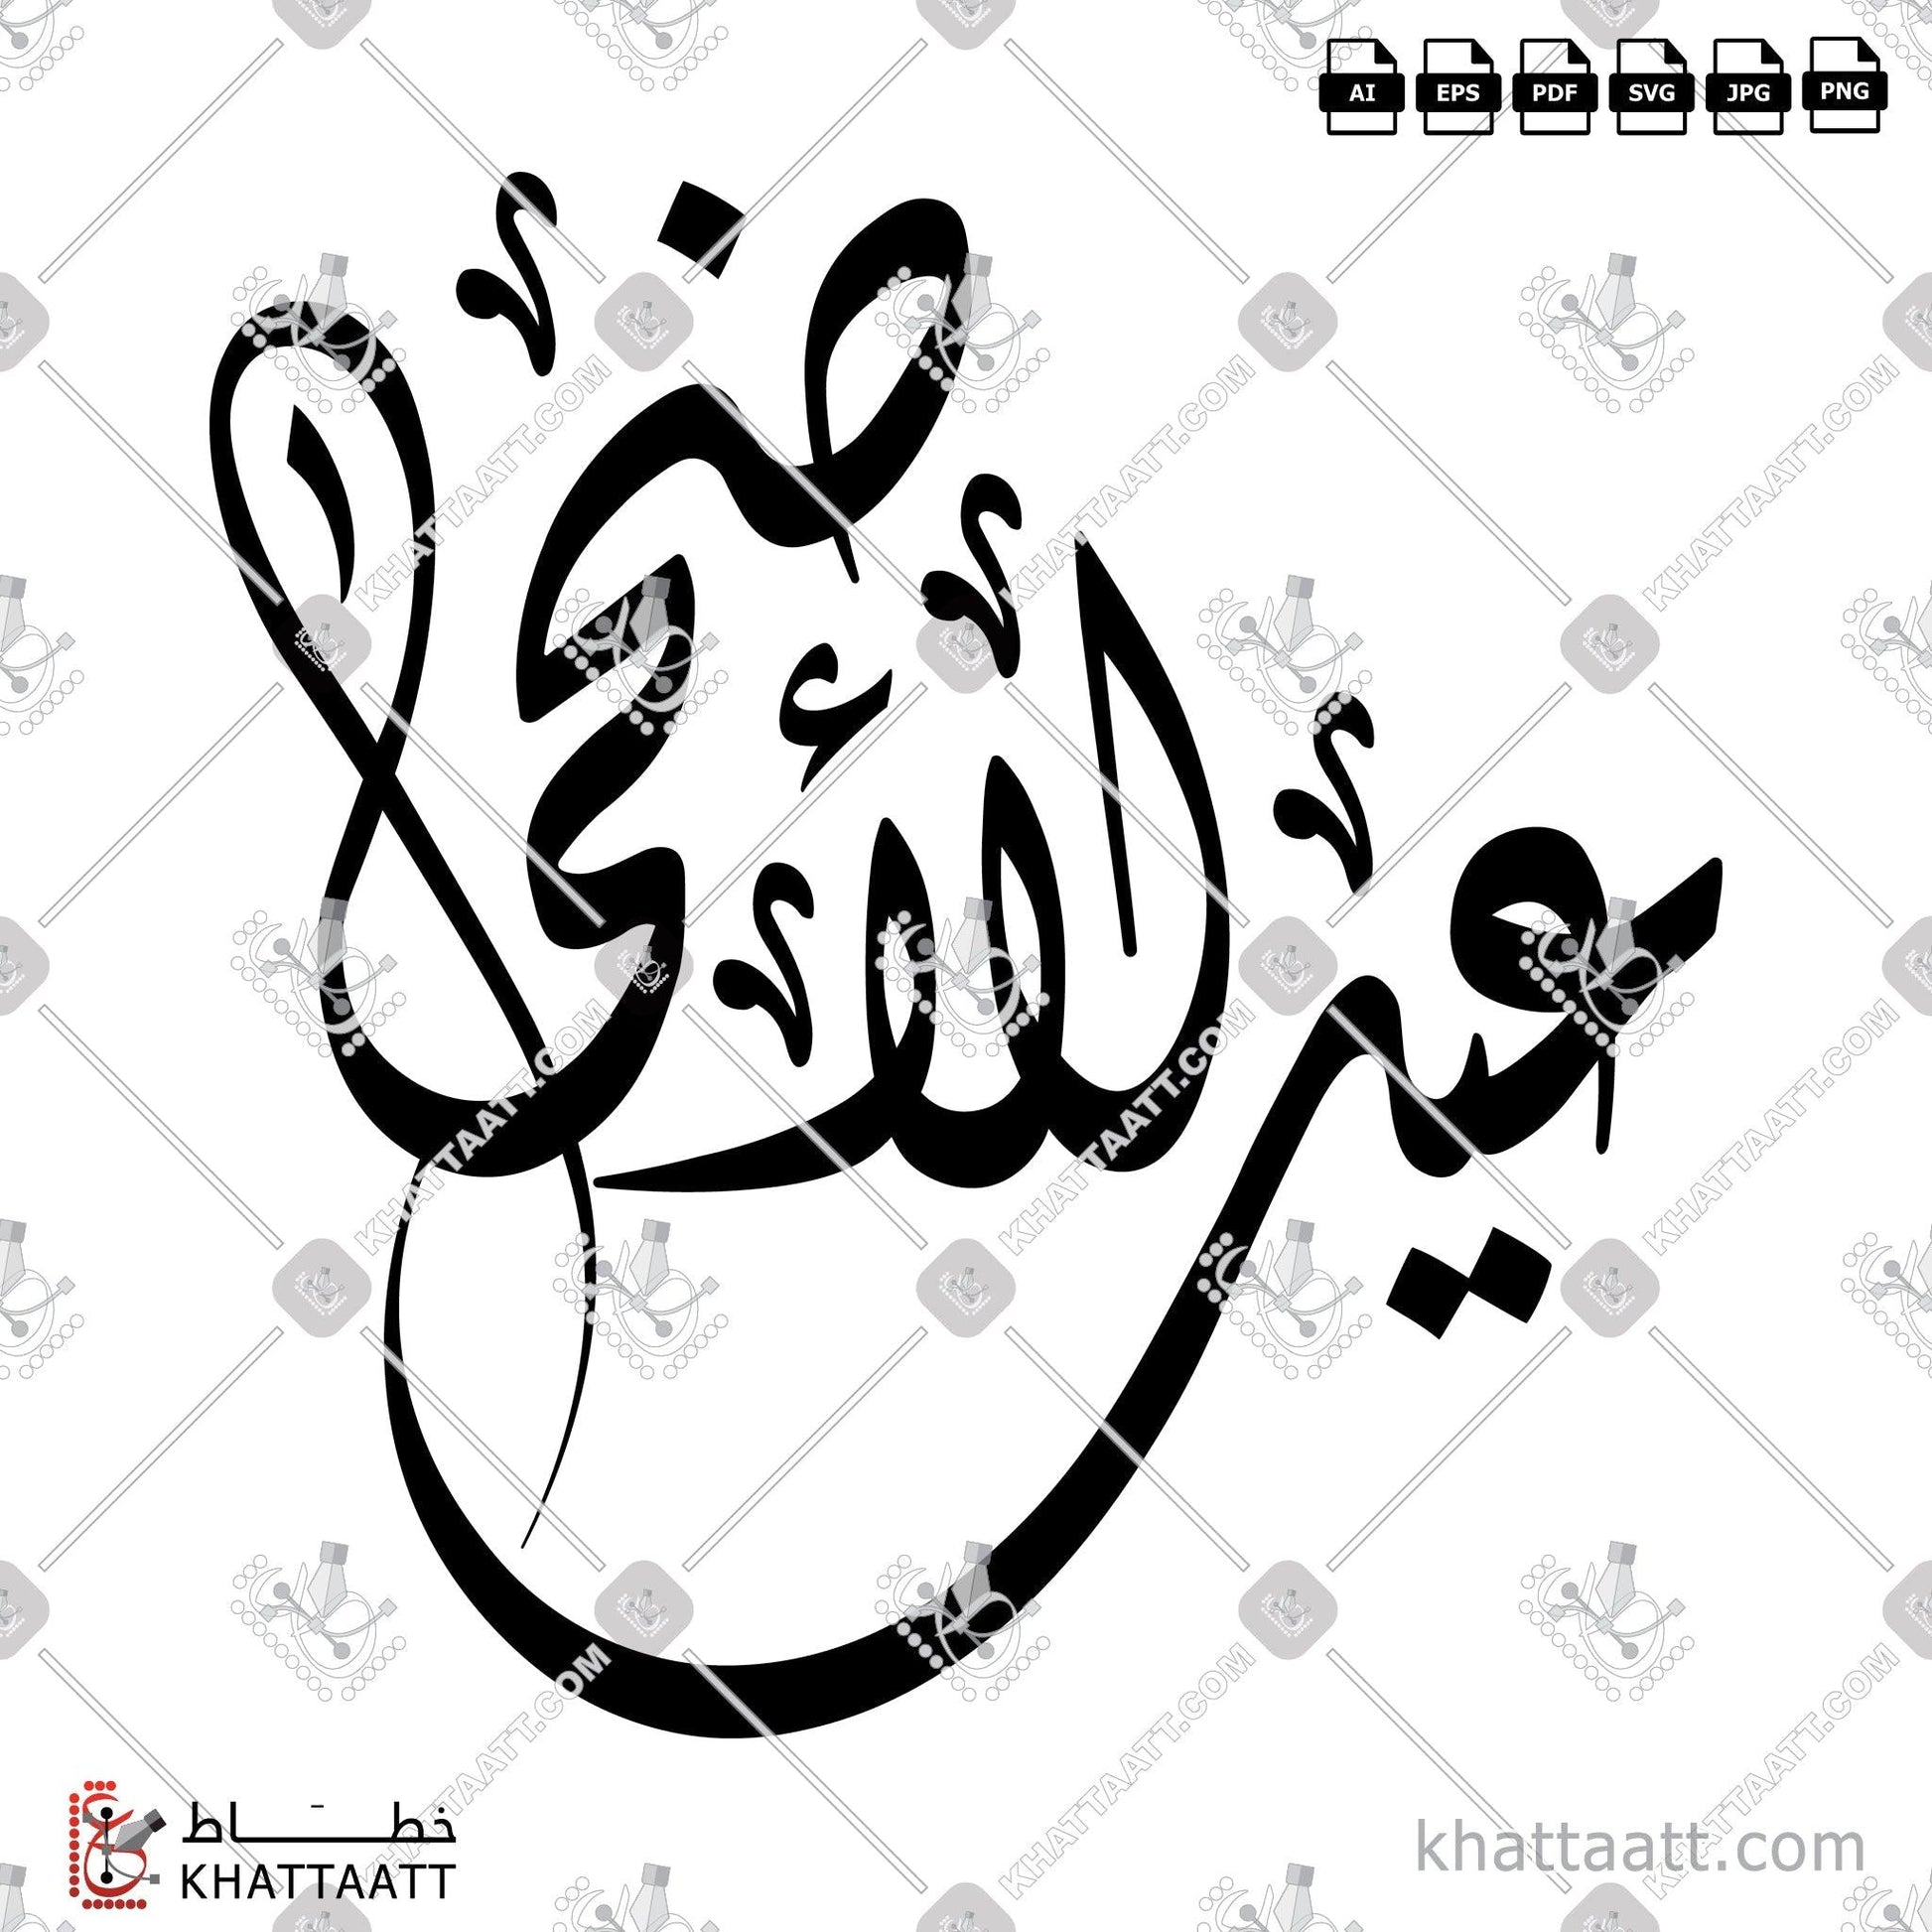 Download Arabic Calligraphy of Eid Al-Adha - عيد الأضحى in Diwani - الخط الديواني in vector and .png